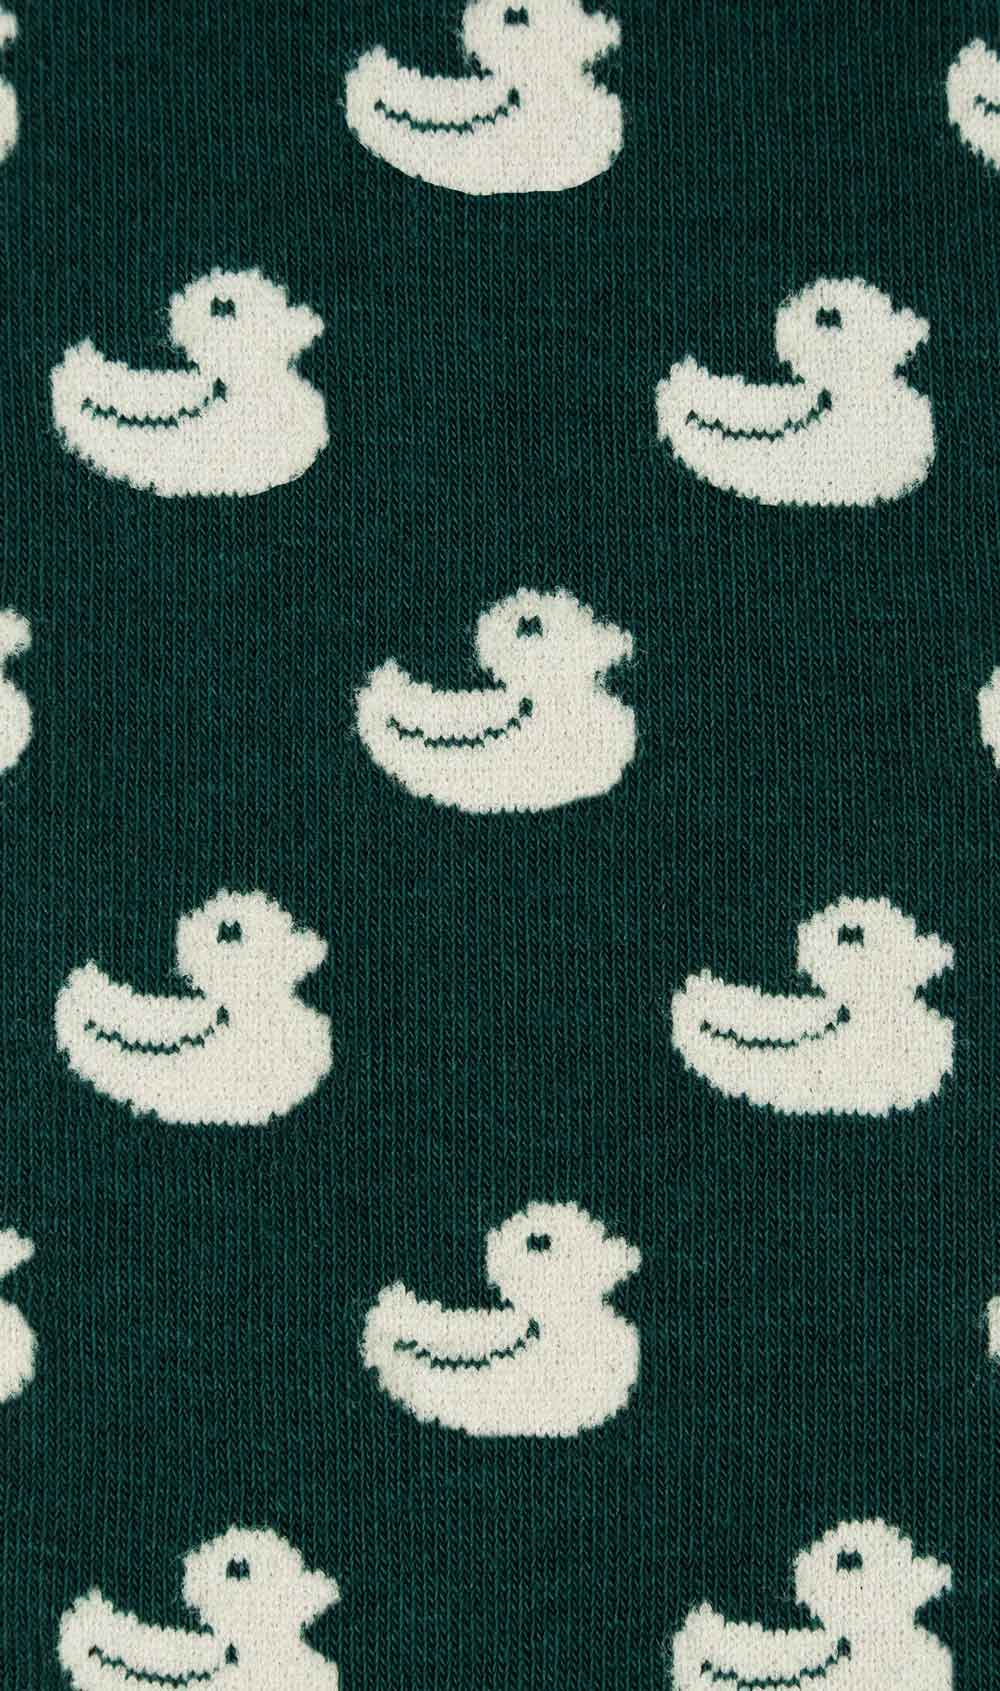 Forest Green Duckling Socks Fabric